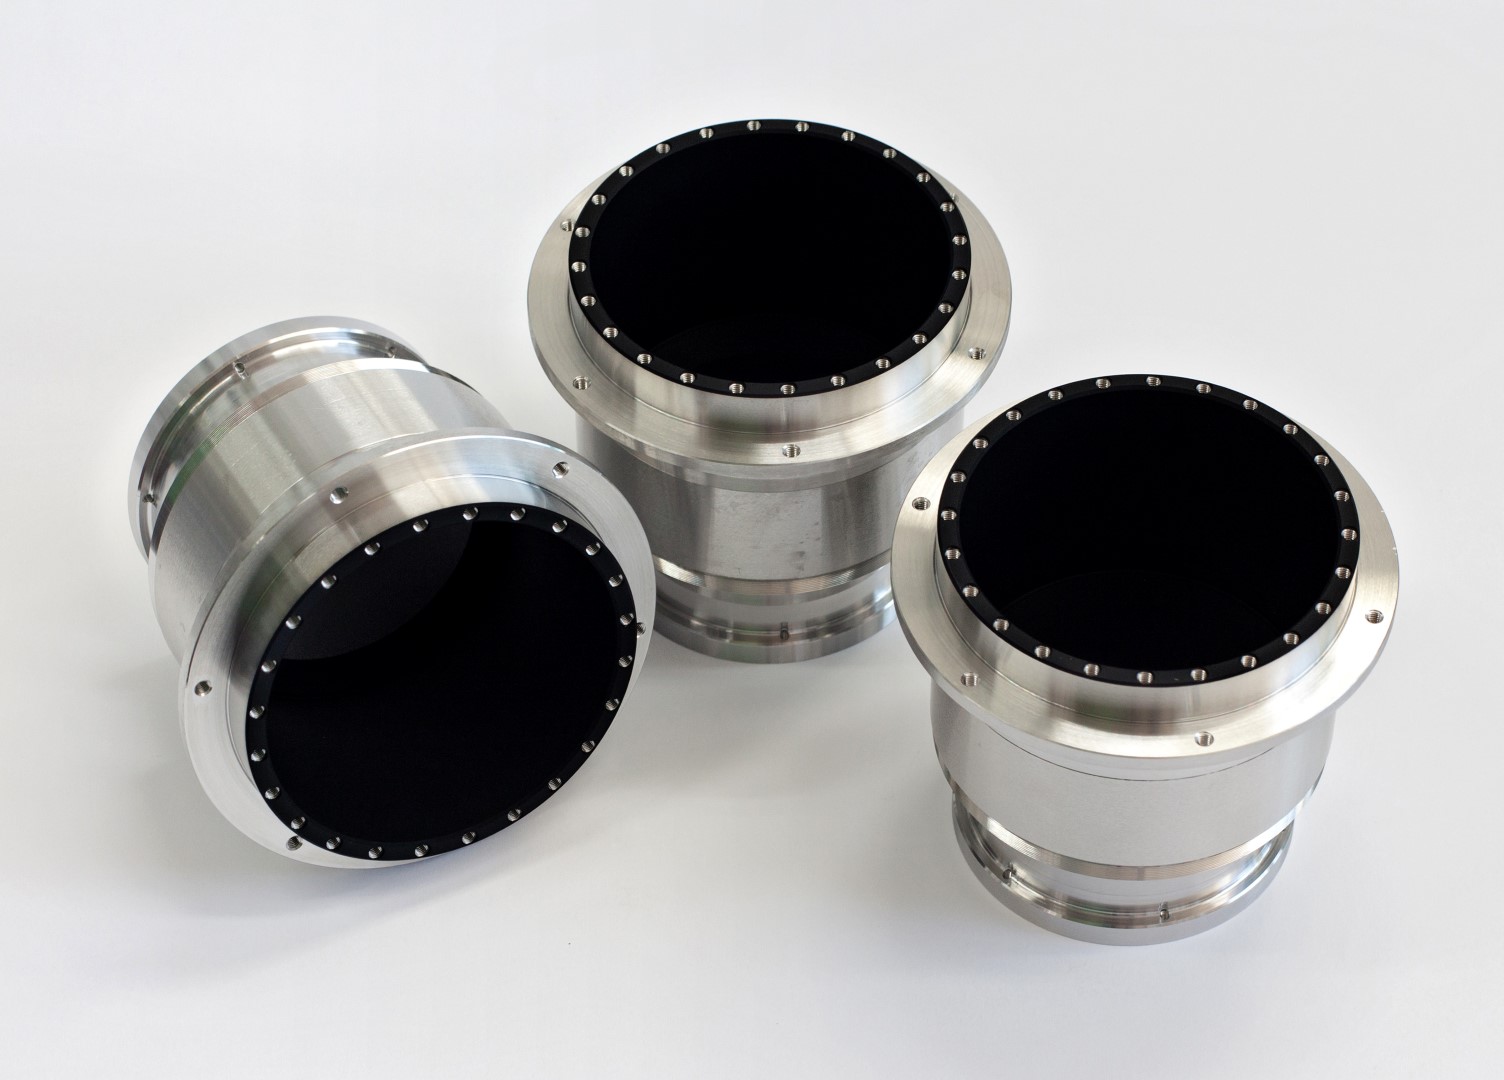 3 circular metallic components coated with acktar's Vacuum Black coating